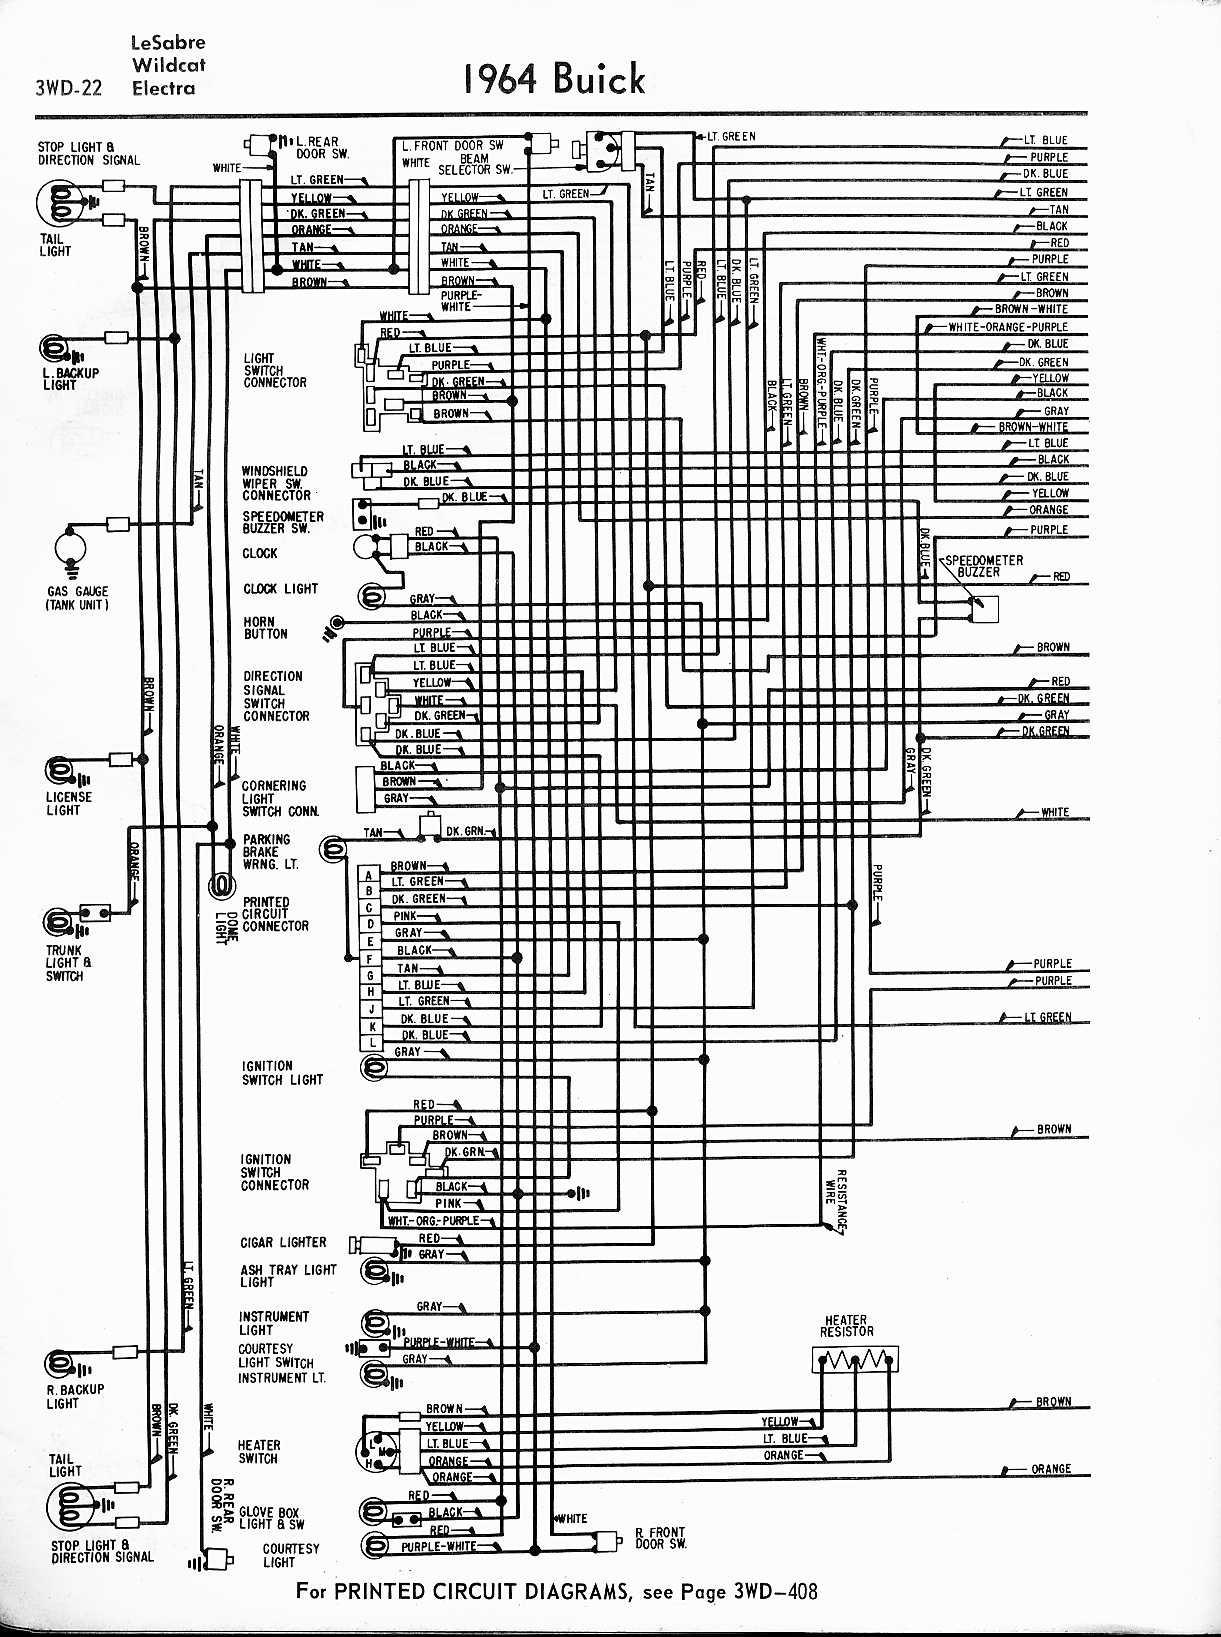 1998 Buick Lesabre Engine Diagram 01 Buick Lesabre Ac Wiring Diagram Wiring Diagram Paper Of 1998 Buick Lesabre Engine Diagram